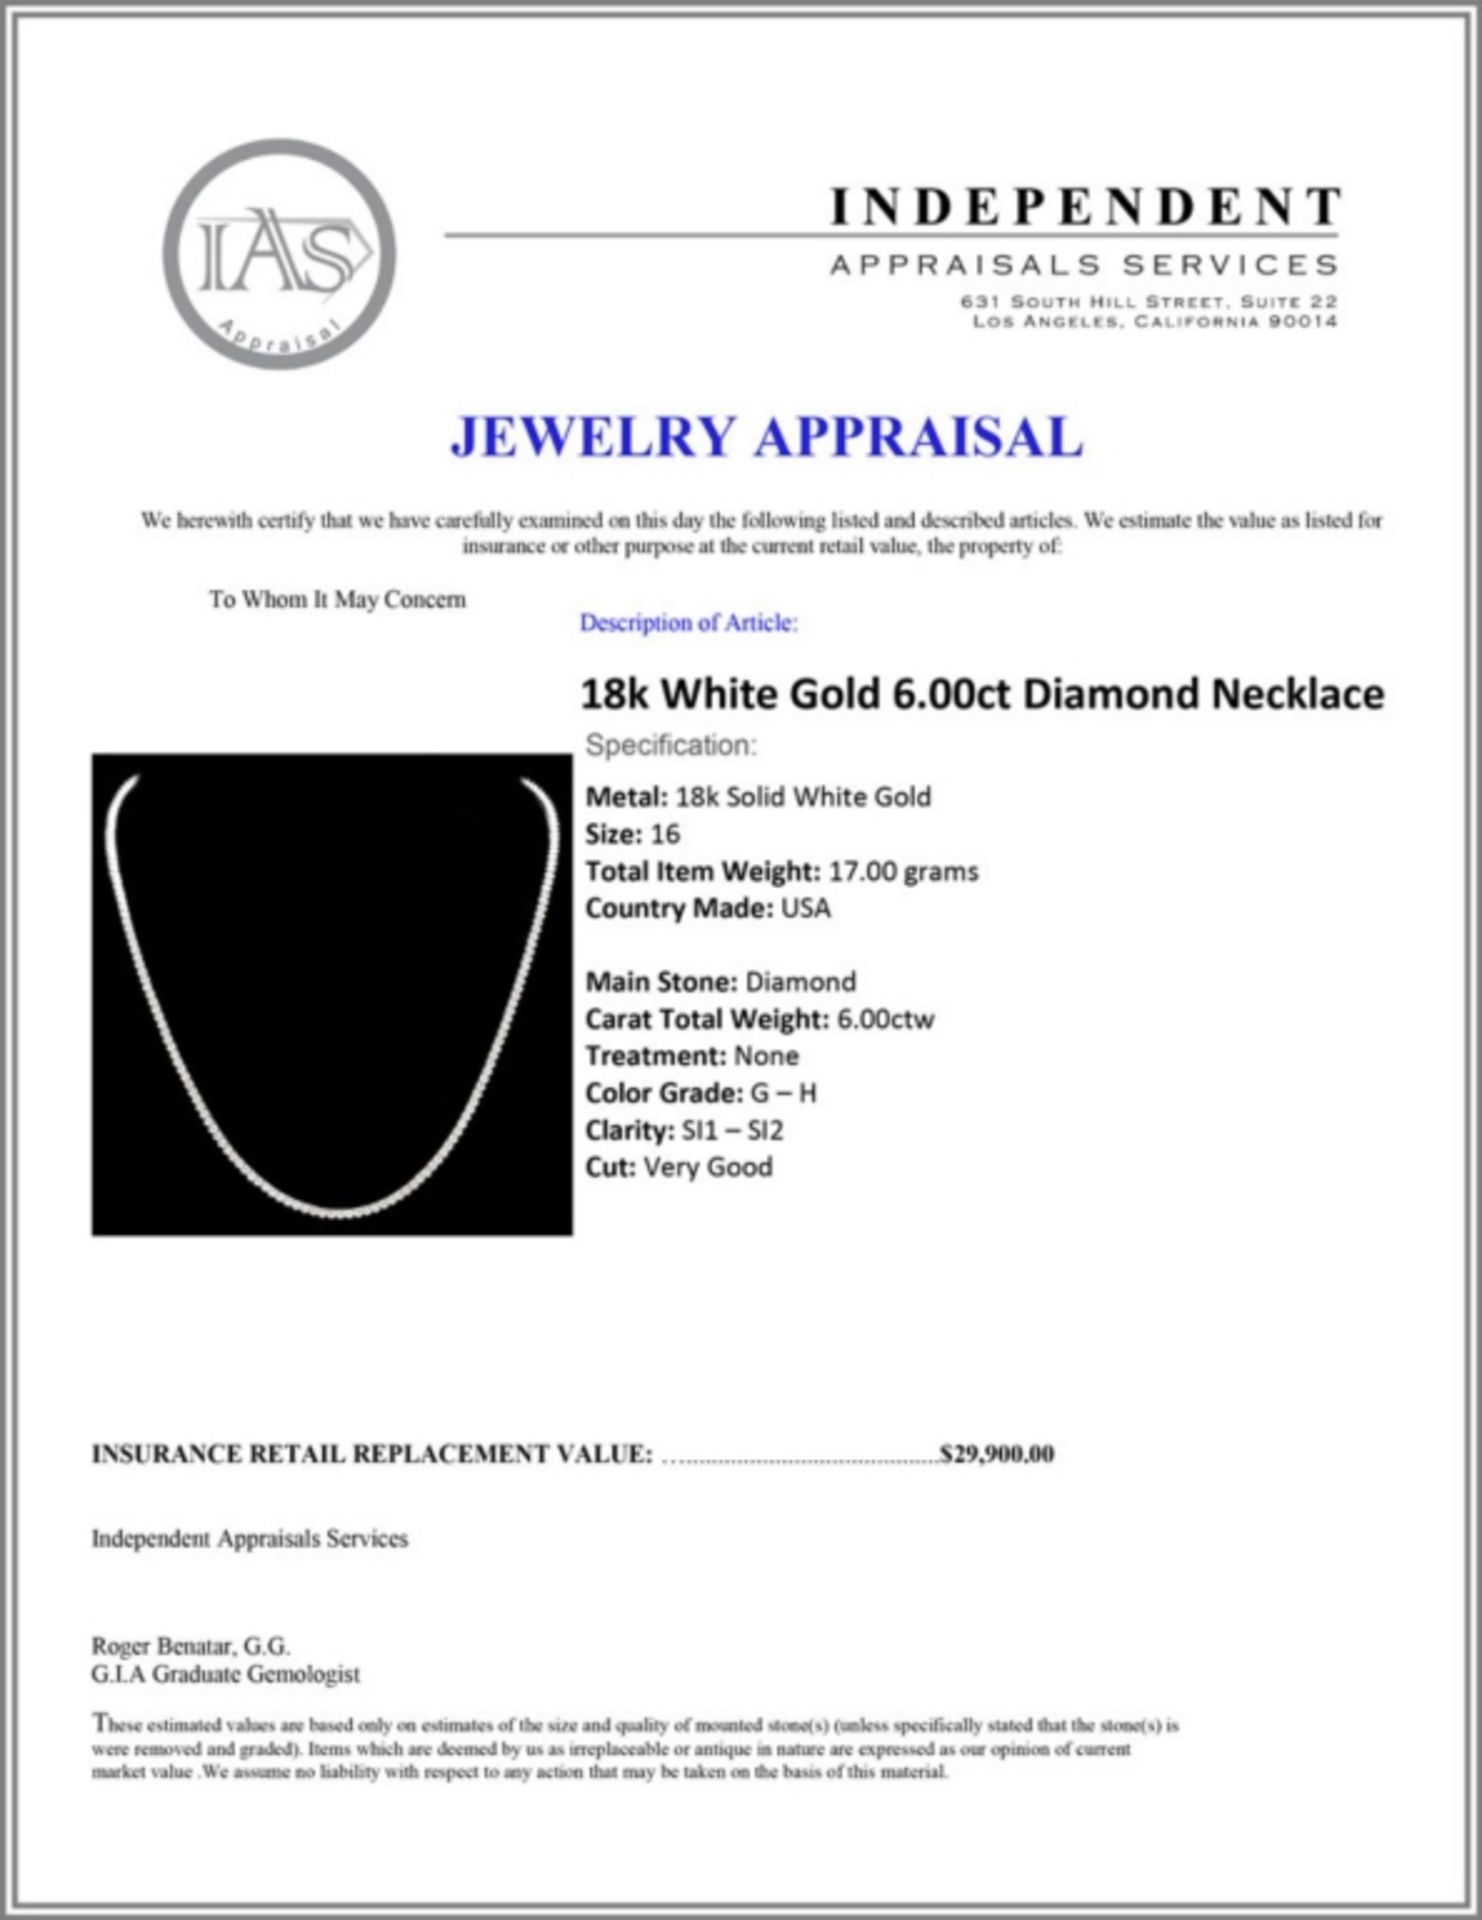 ^18k White Gold 6.00ct Diamond Necklace - Image 3 of 3